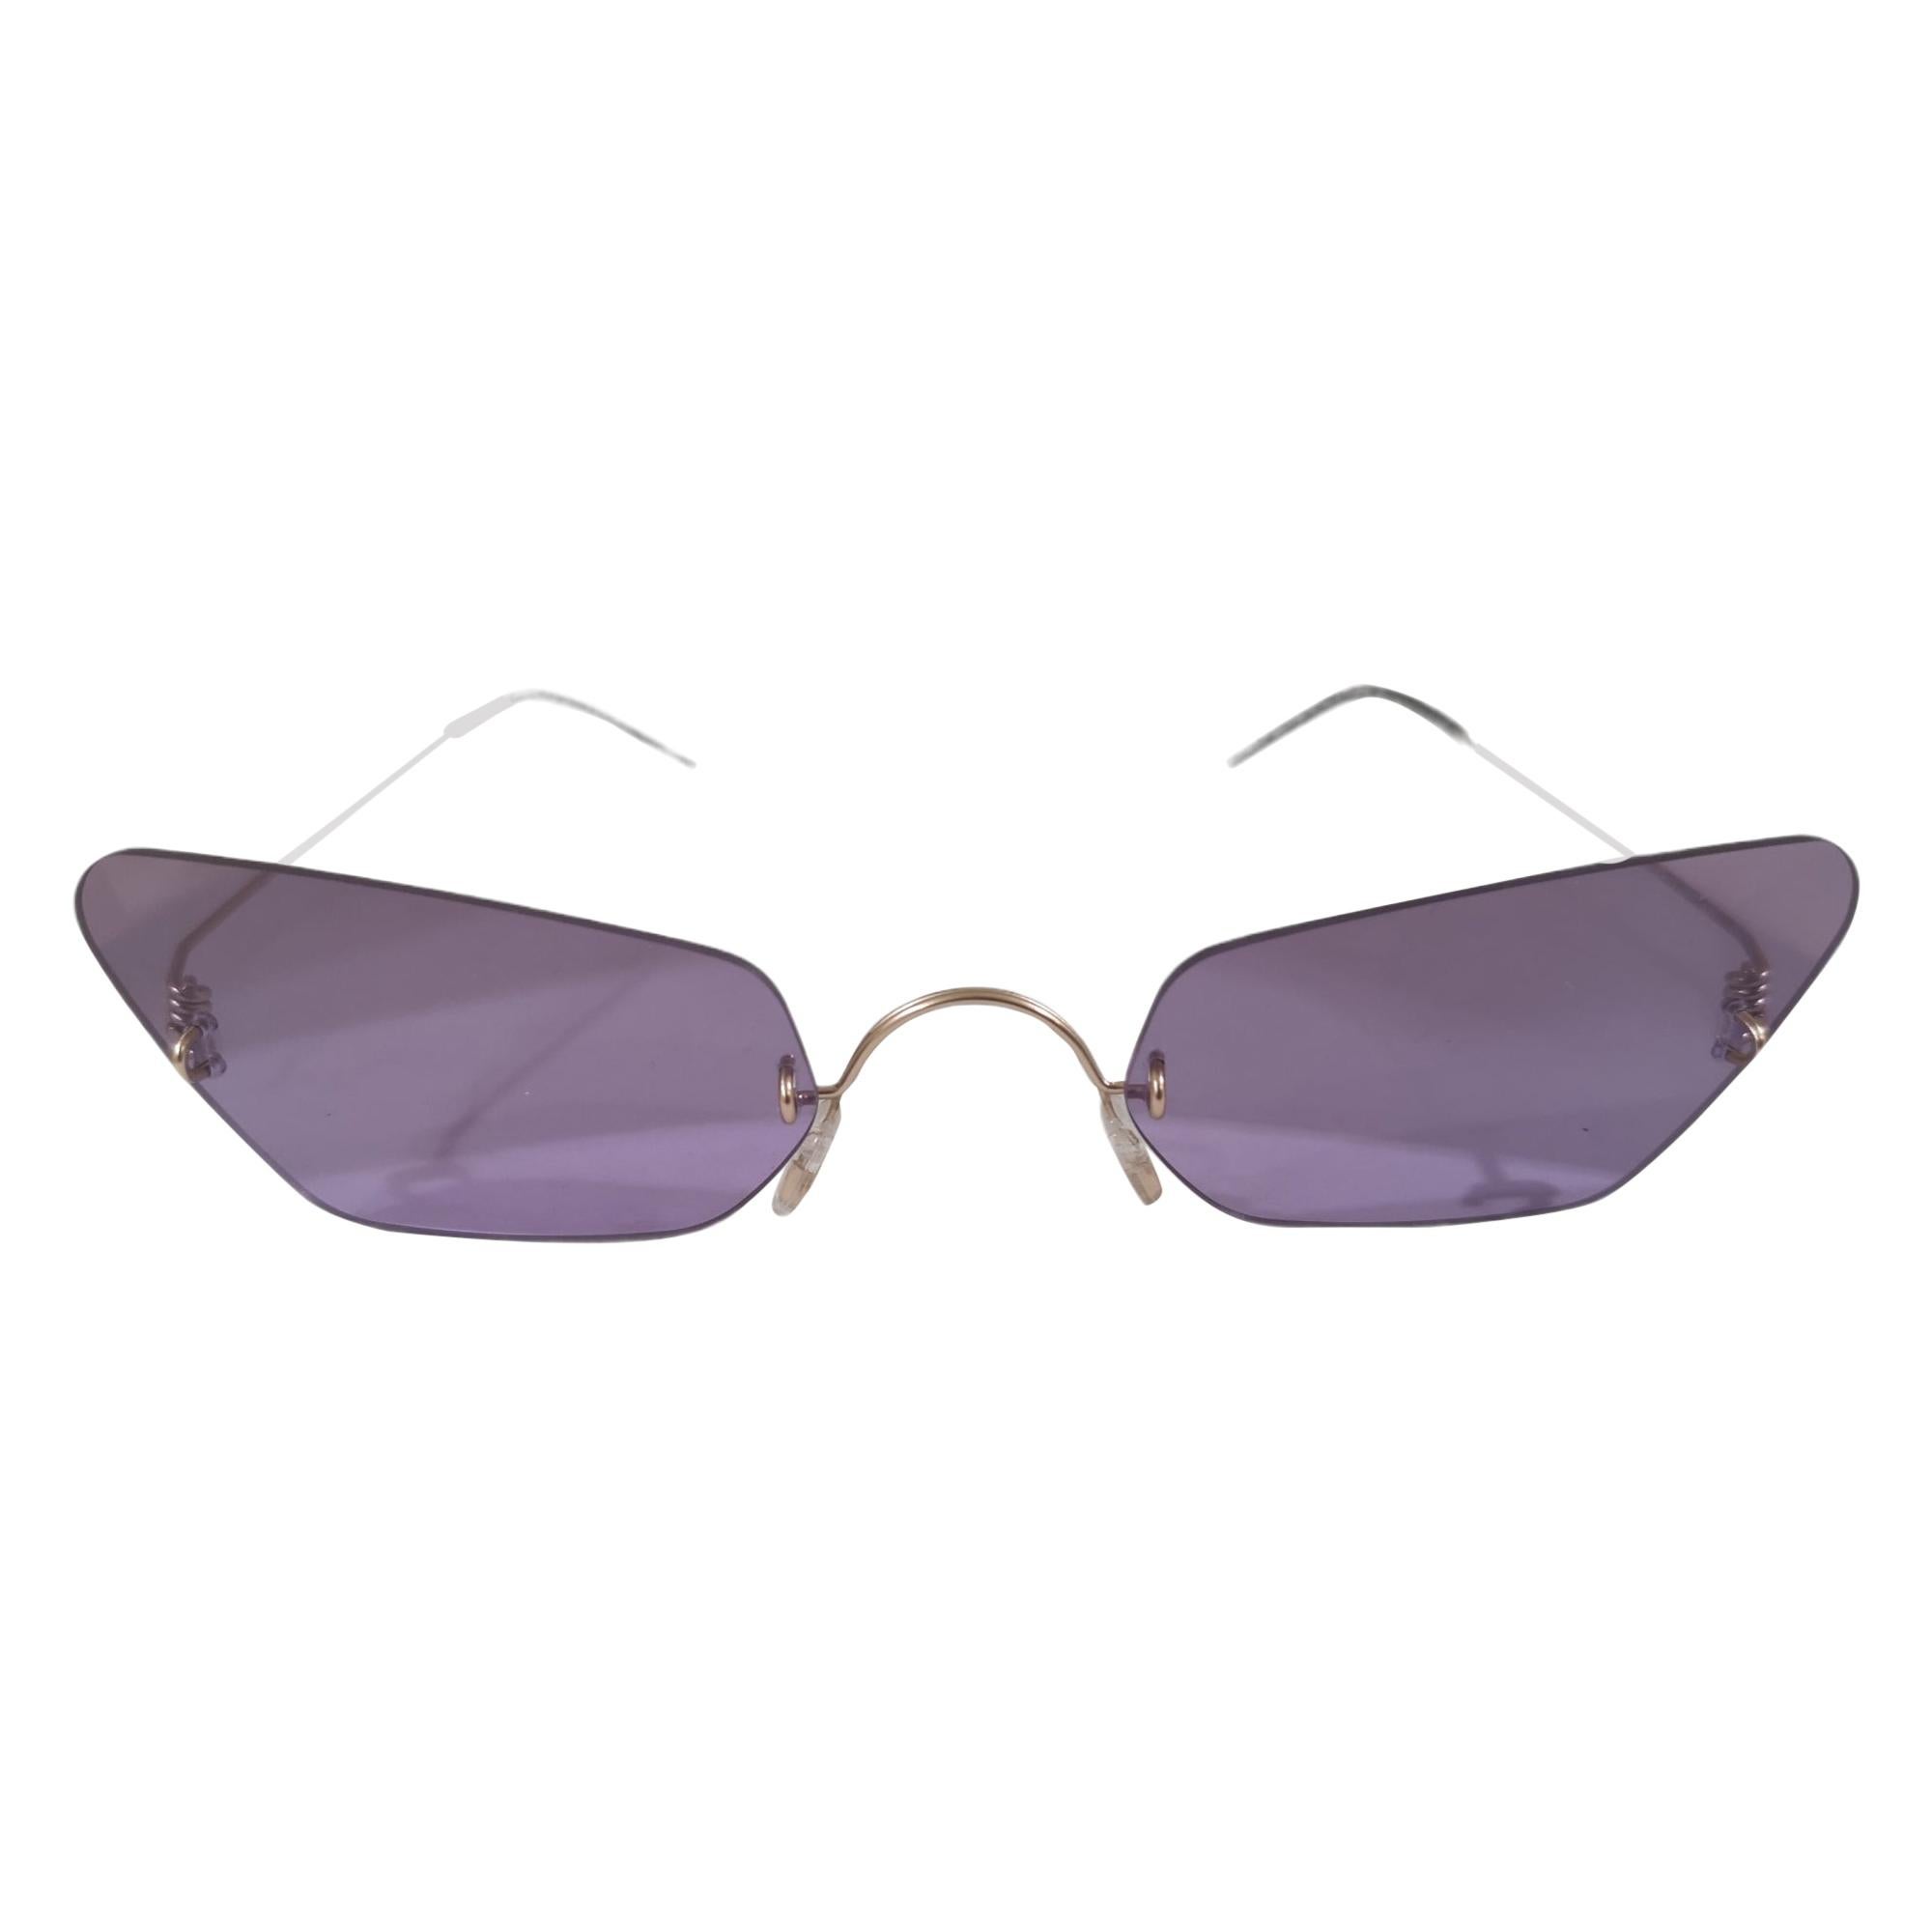 Light purple sunglasses NWOT